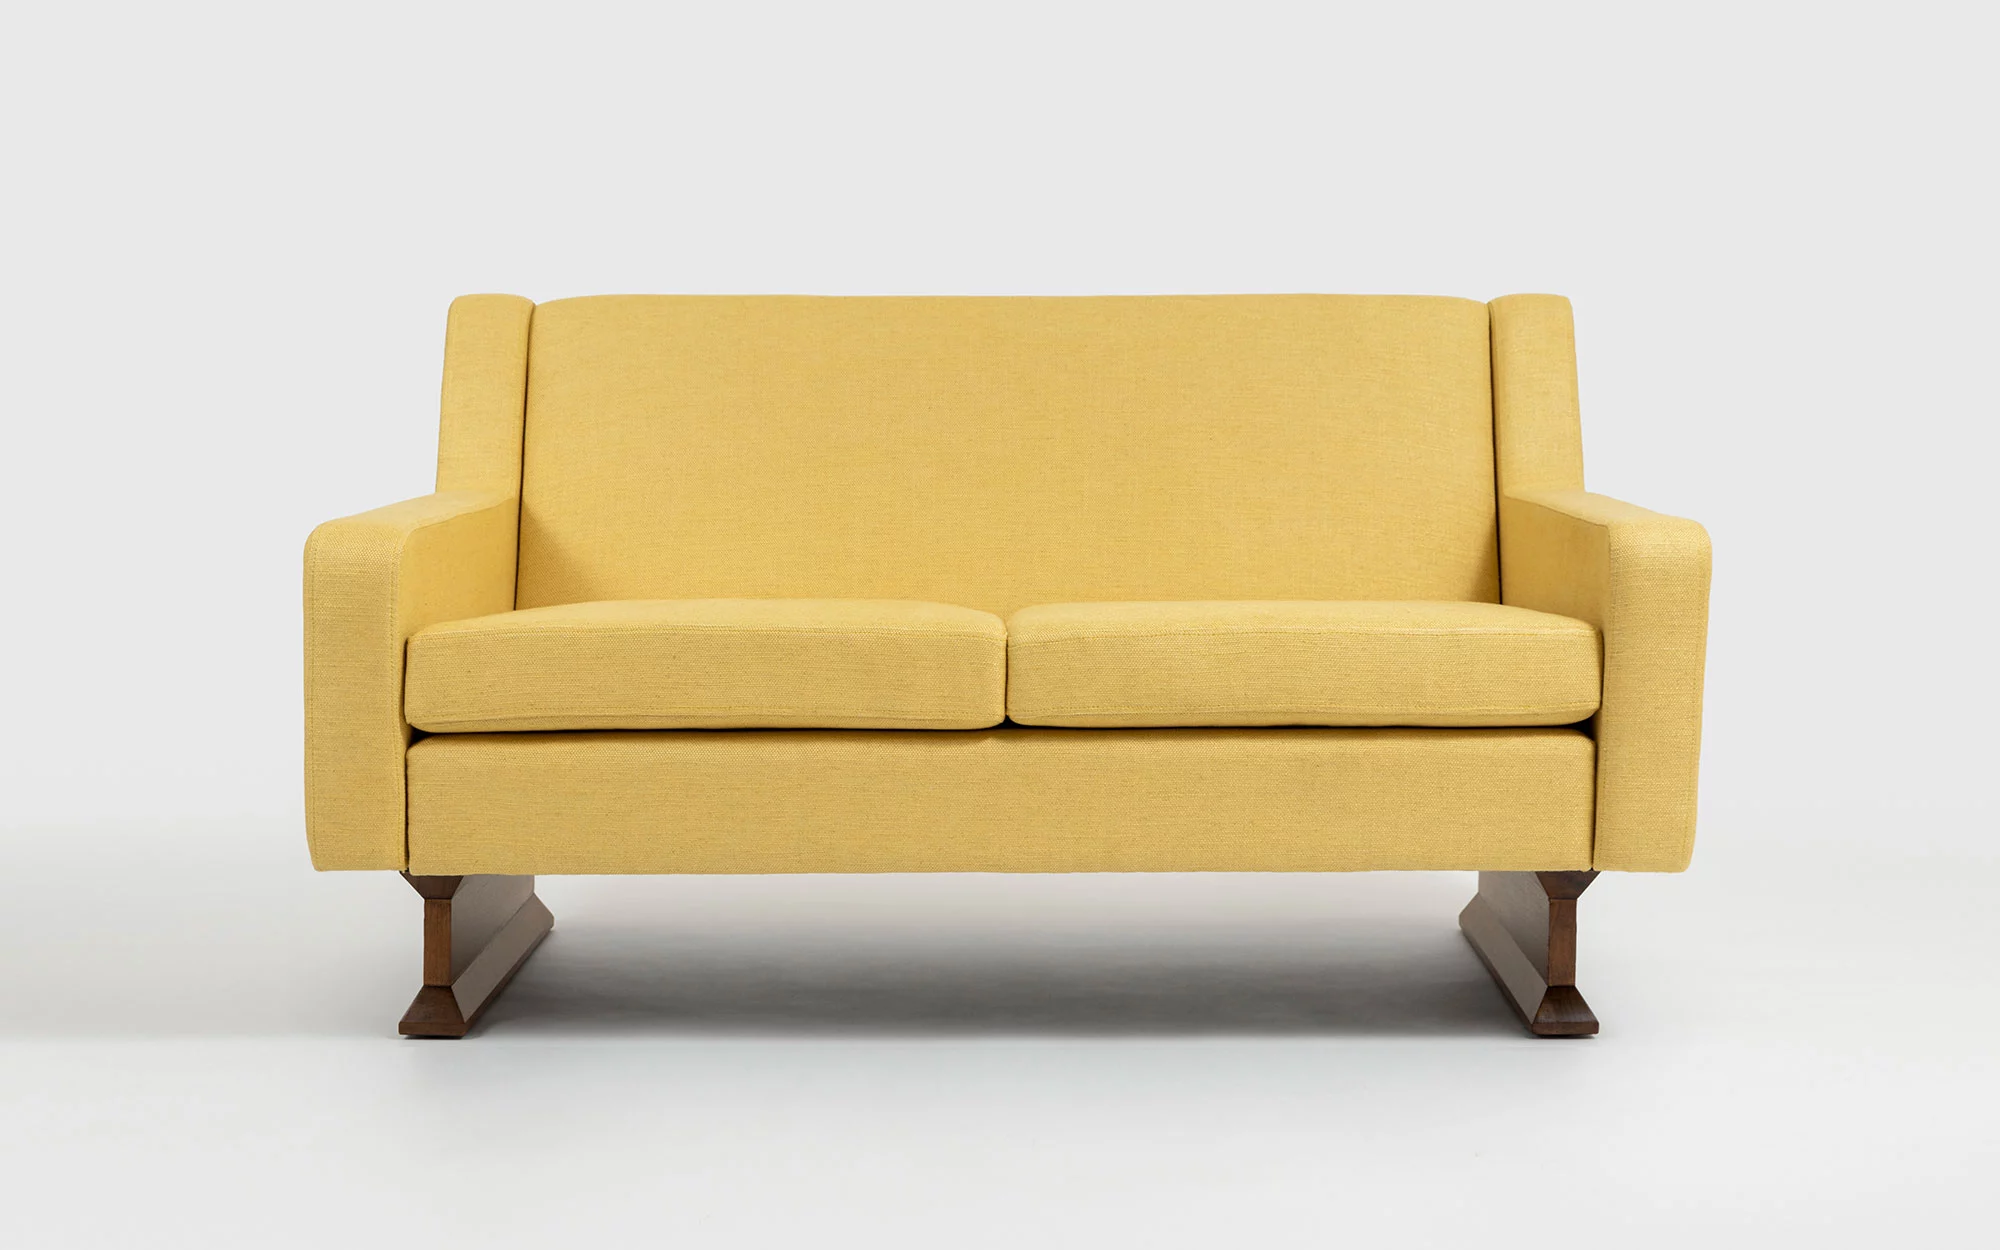 Divano DV33 (Small) (yellow) - Franco Albini - Seating - Galerie kreo